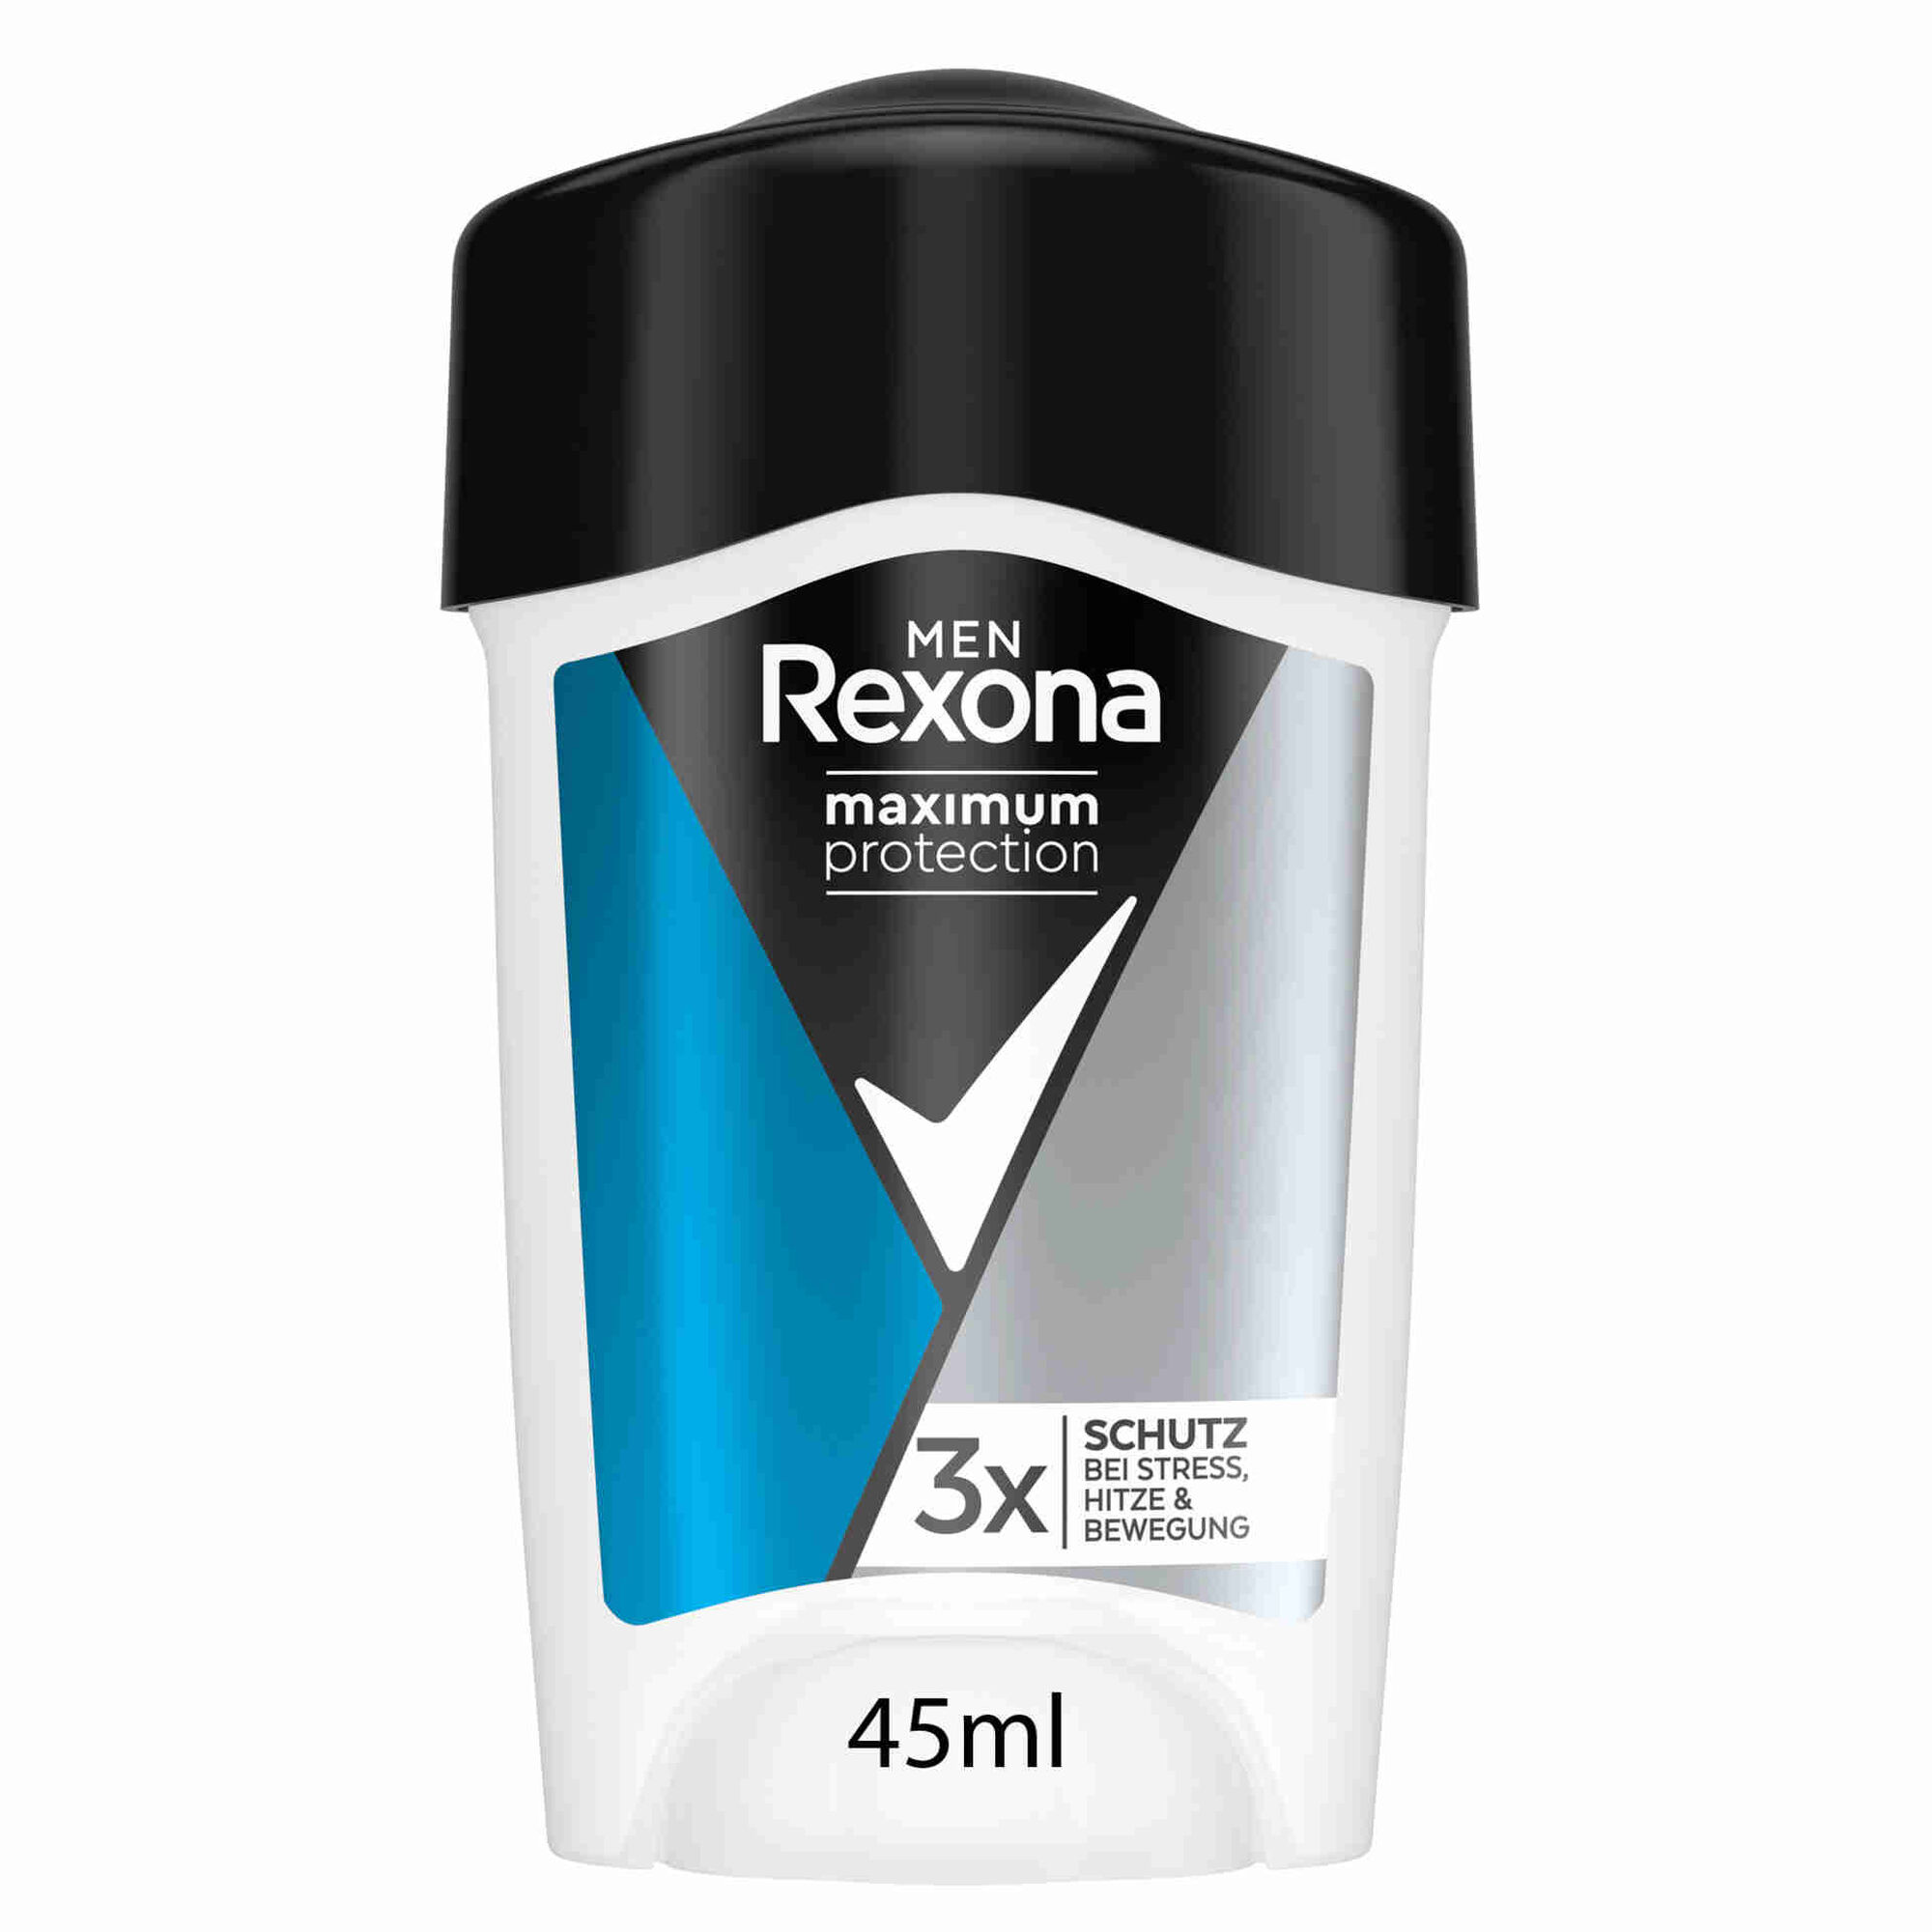 3-PcsPack Rexona Algodão Dry Stick Antiperspirante Desodorante